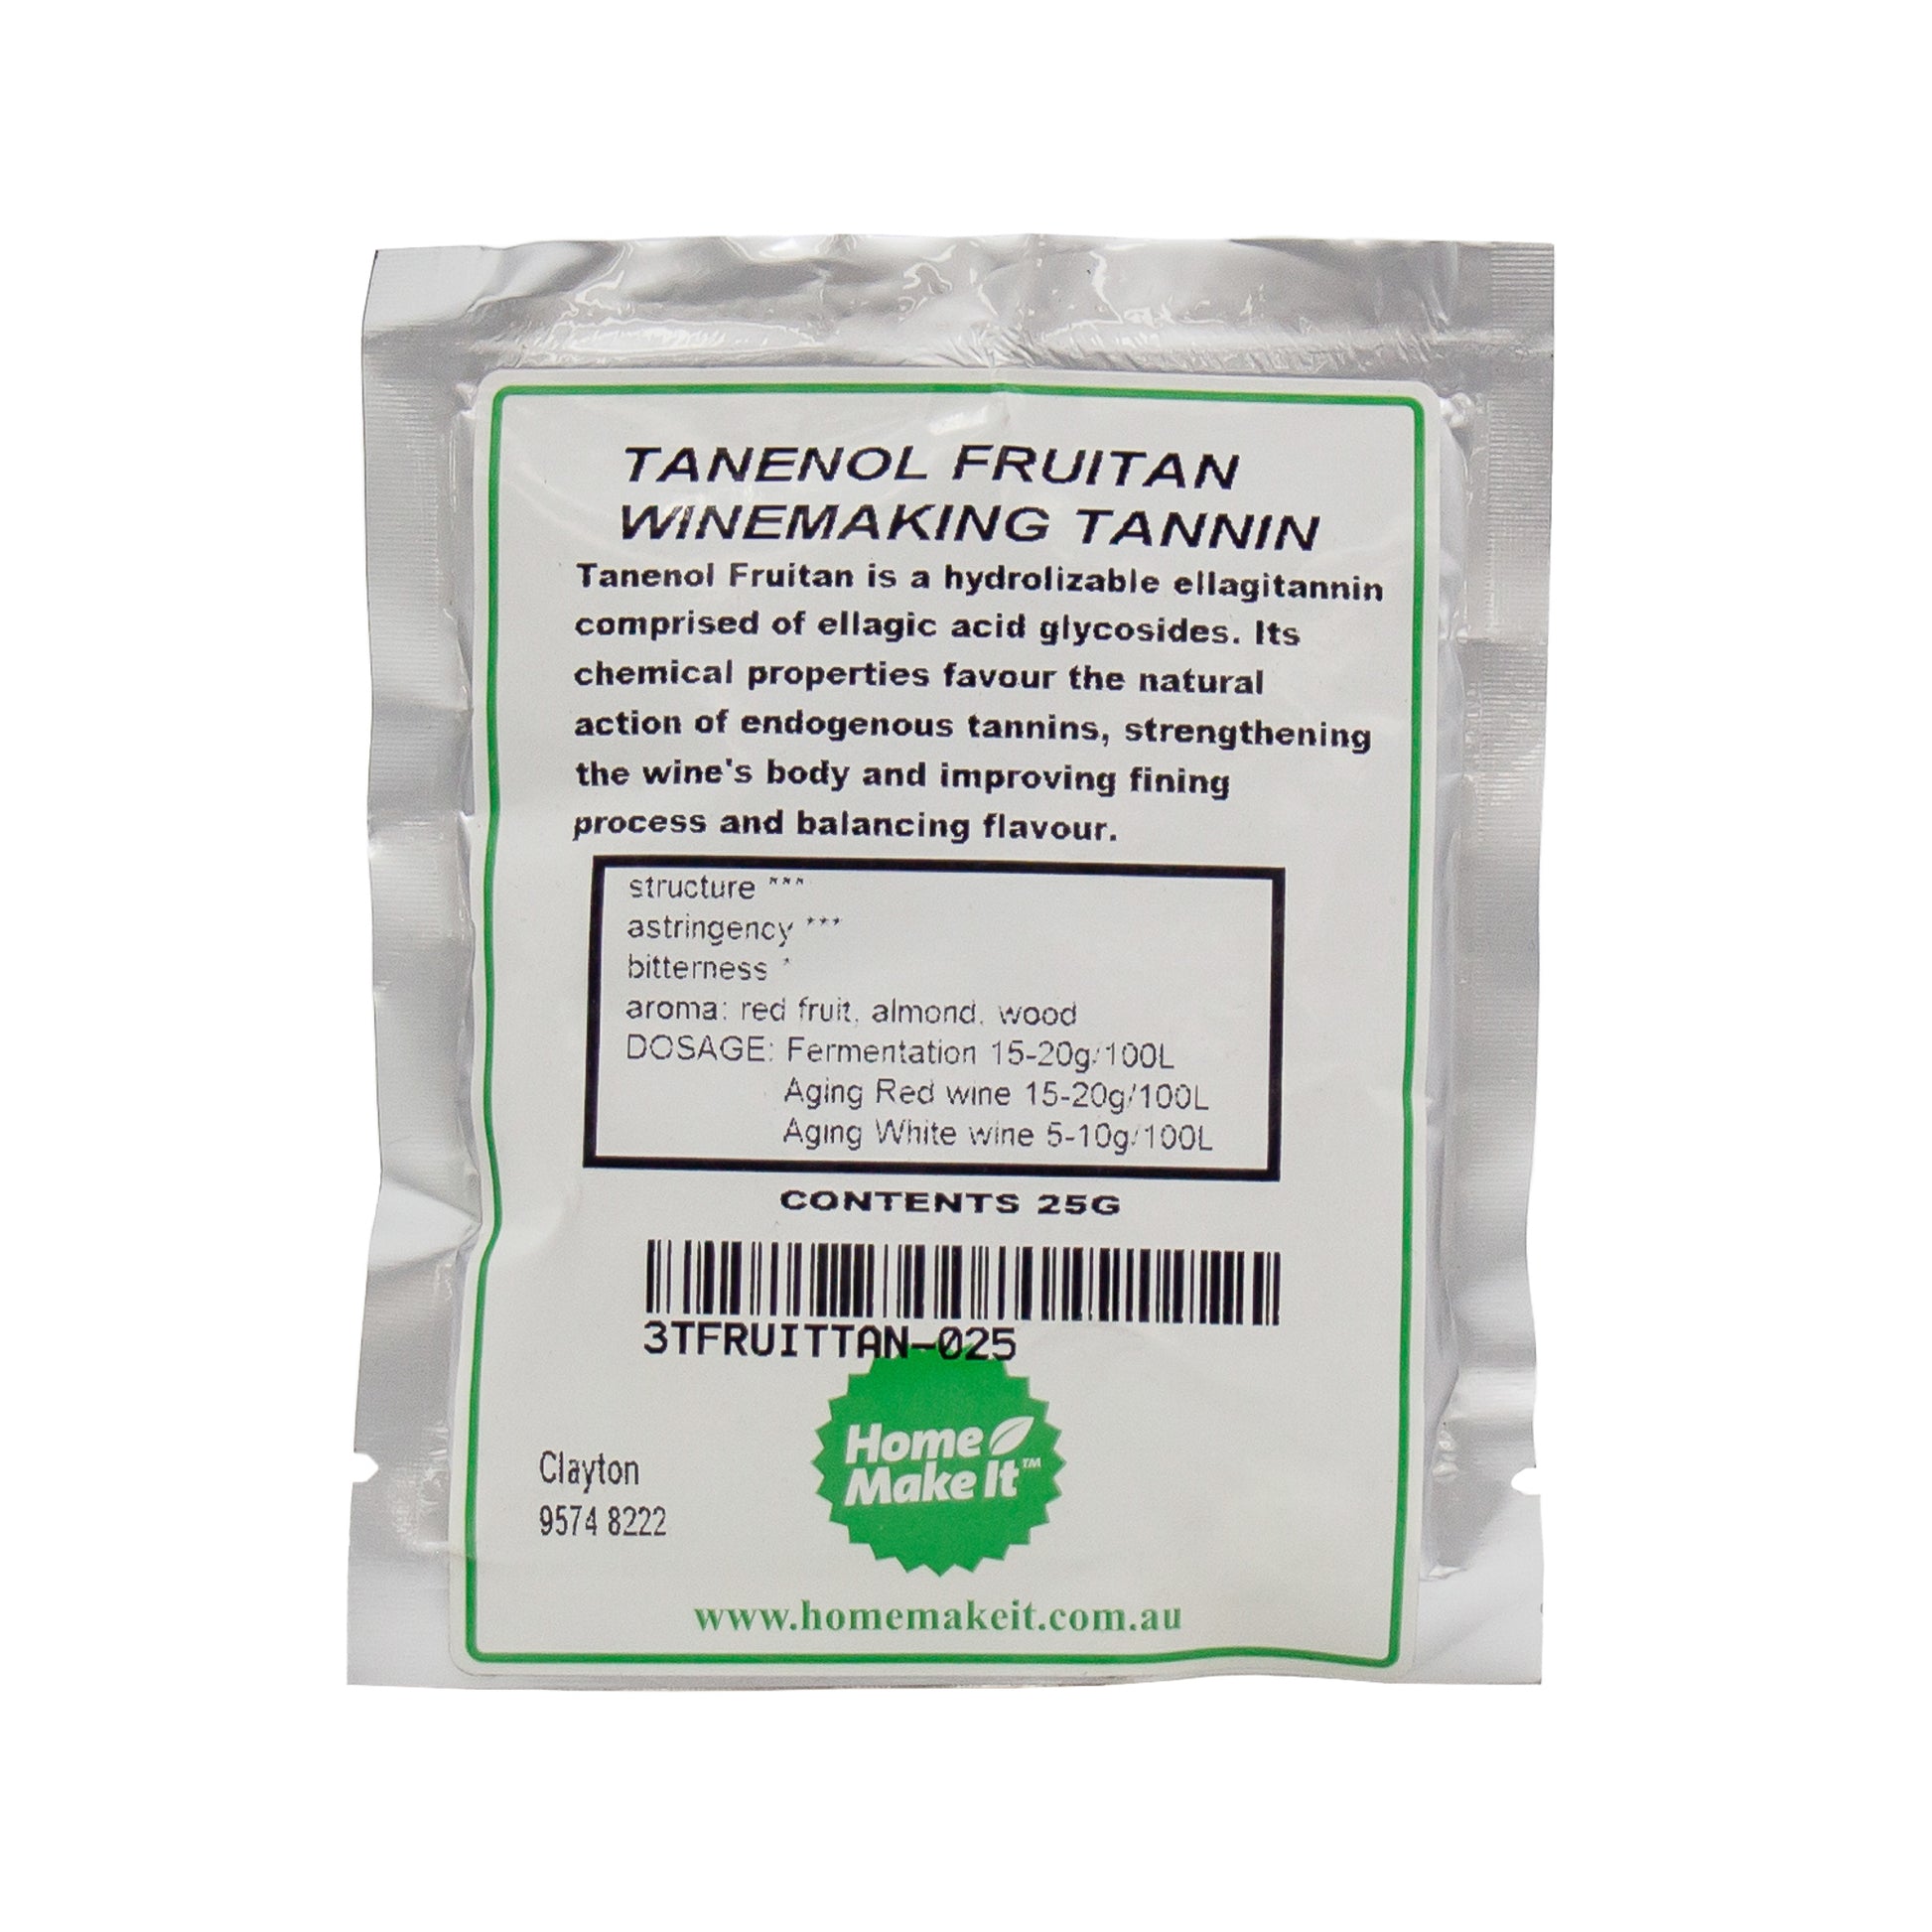 25g bag of tannin tanenol fruitan used in wine making